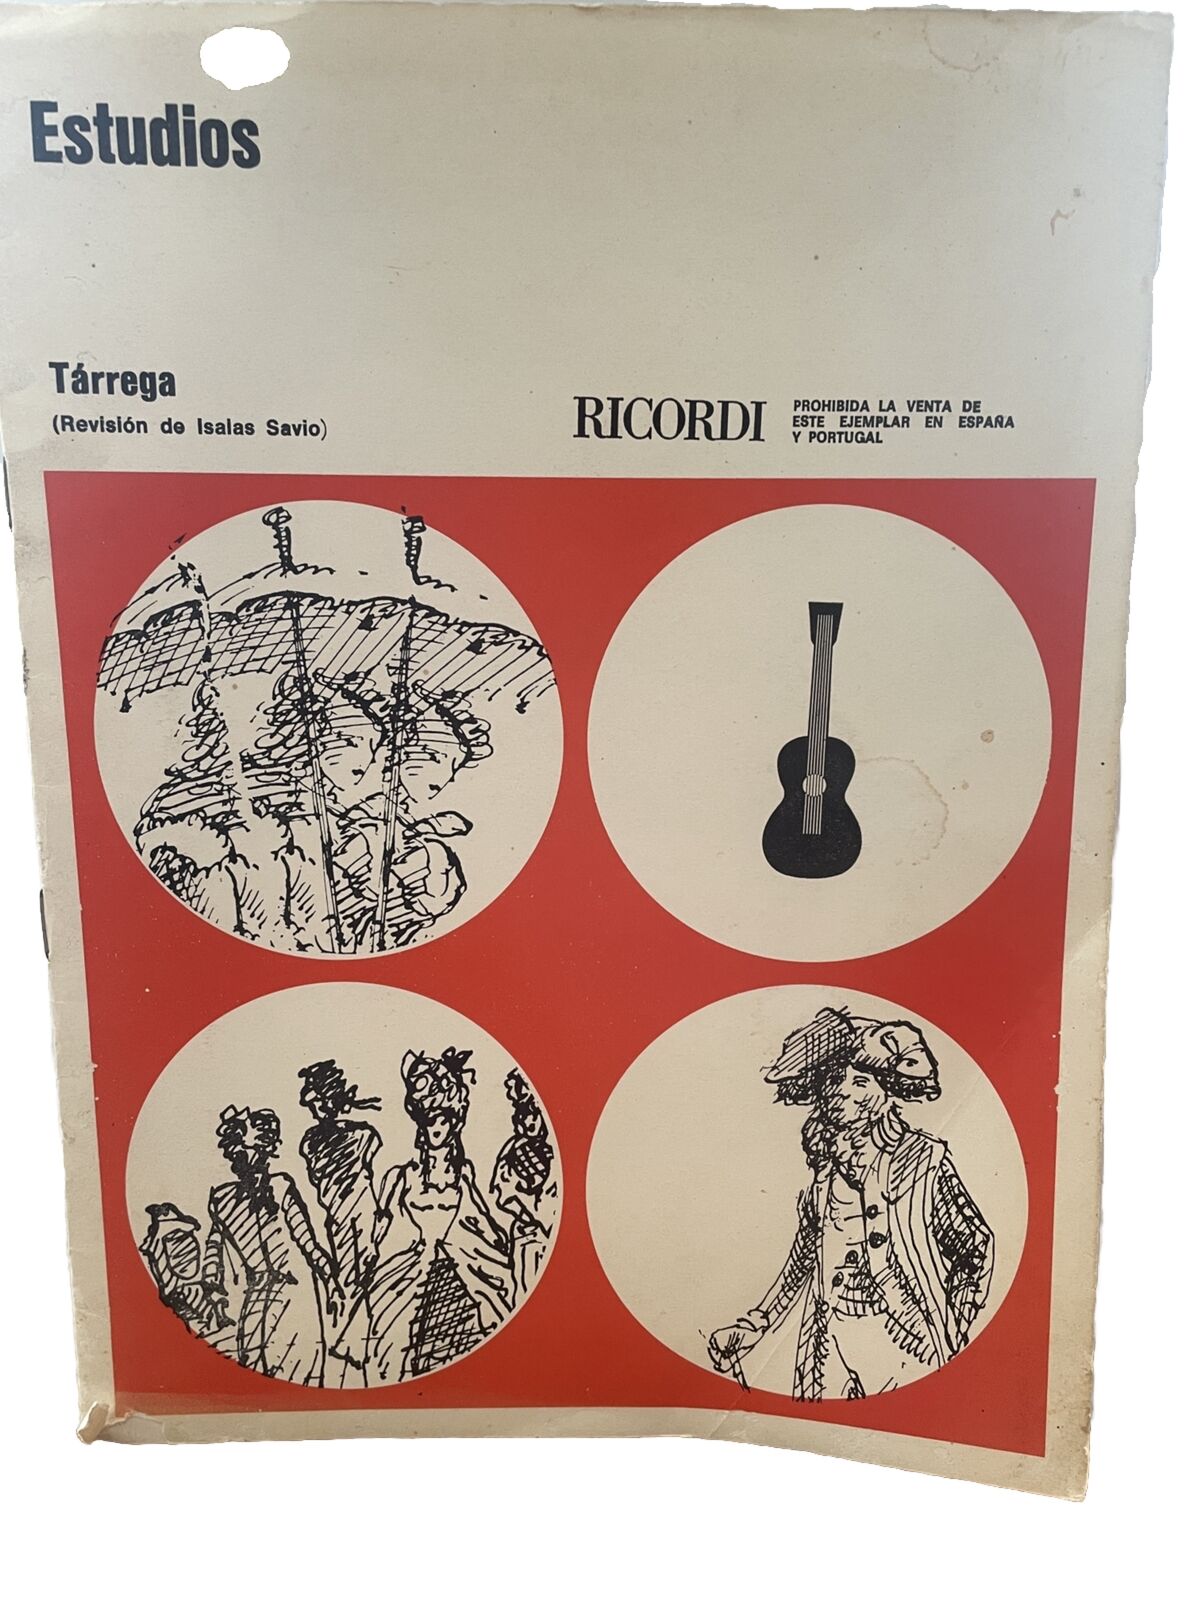 Tarrega Estudios Revisions bt Savio Ricordi 1960 vintage Clean Inside Pages